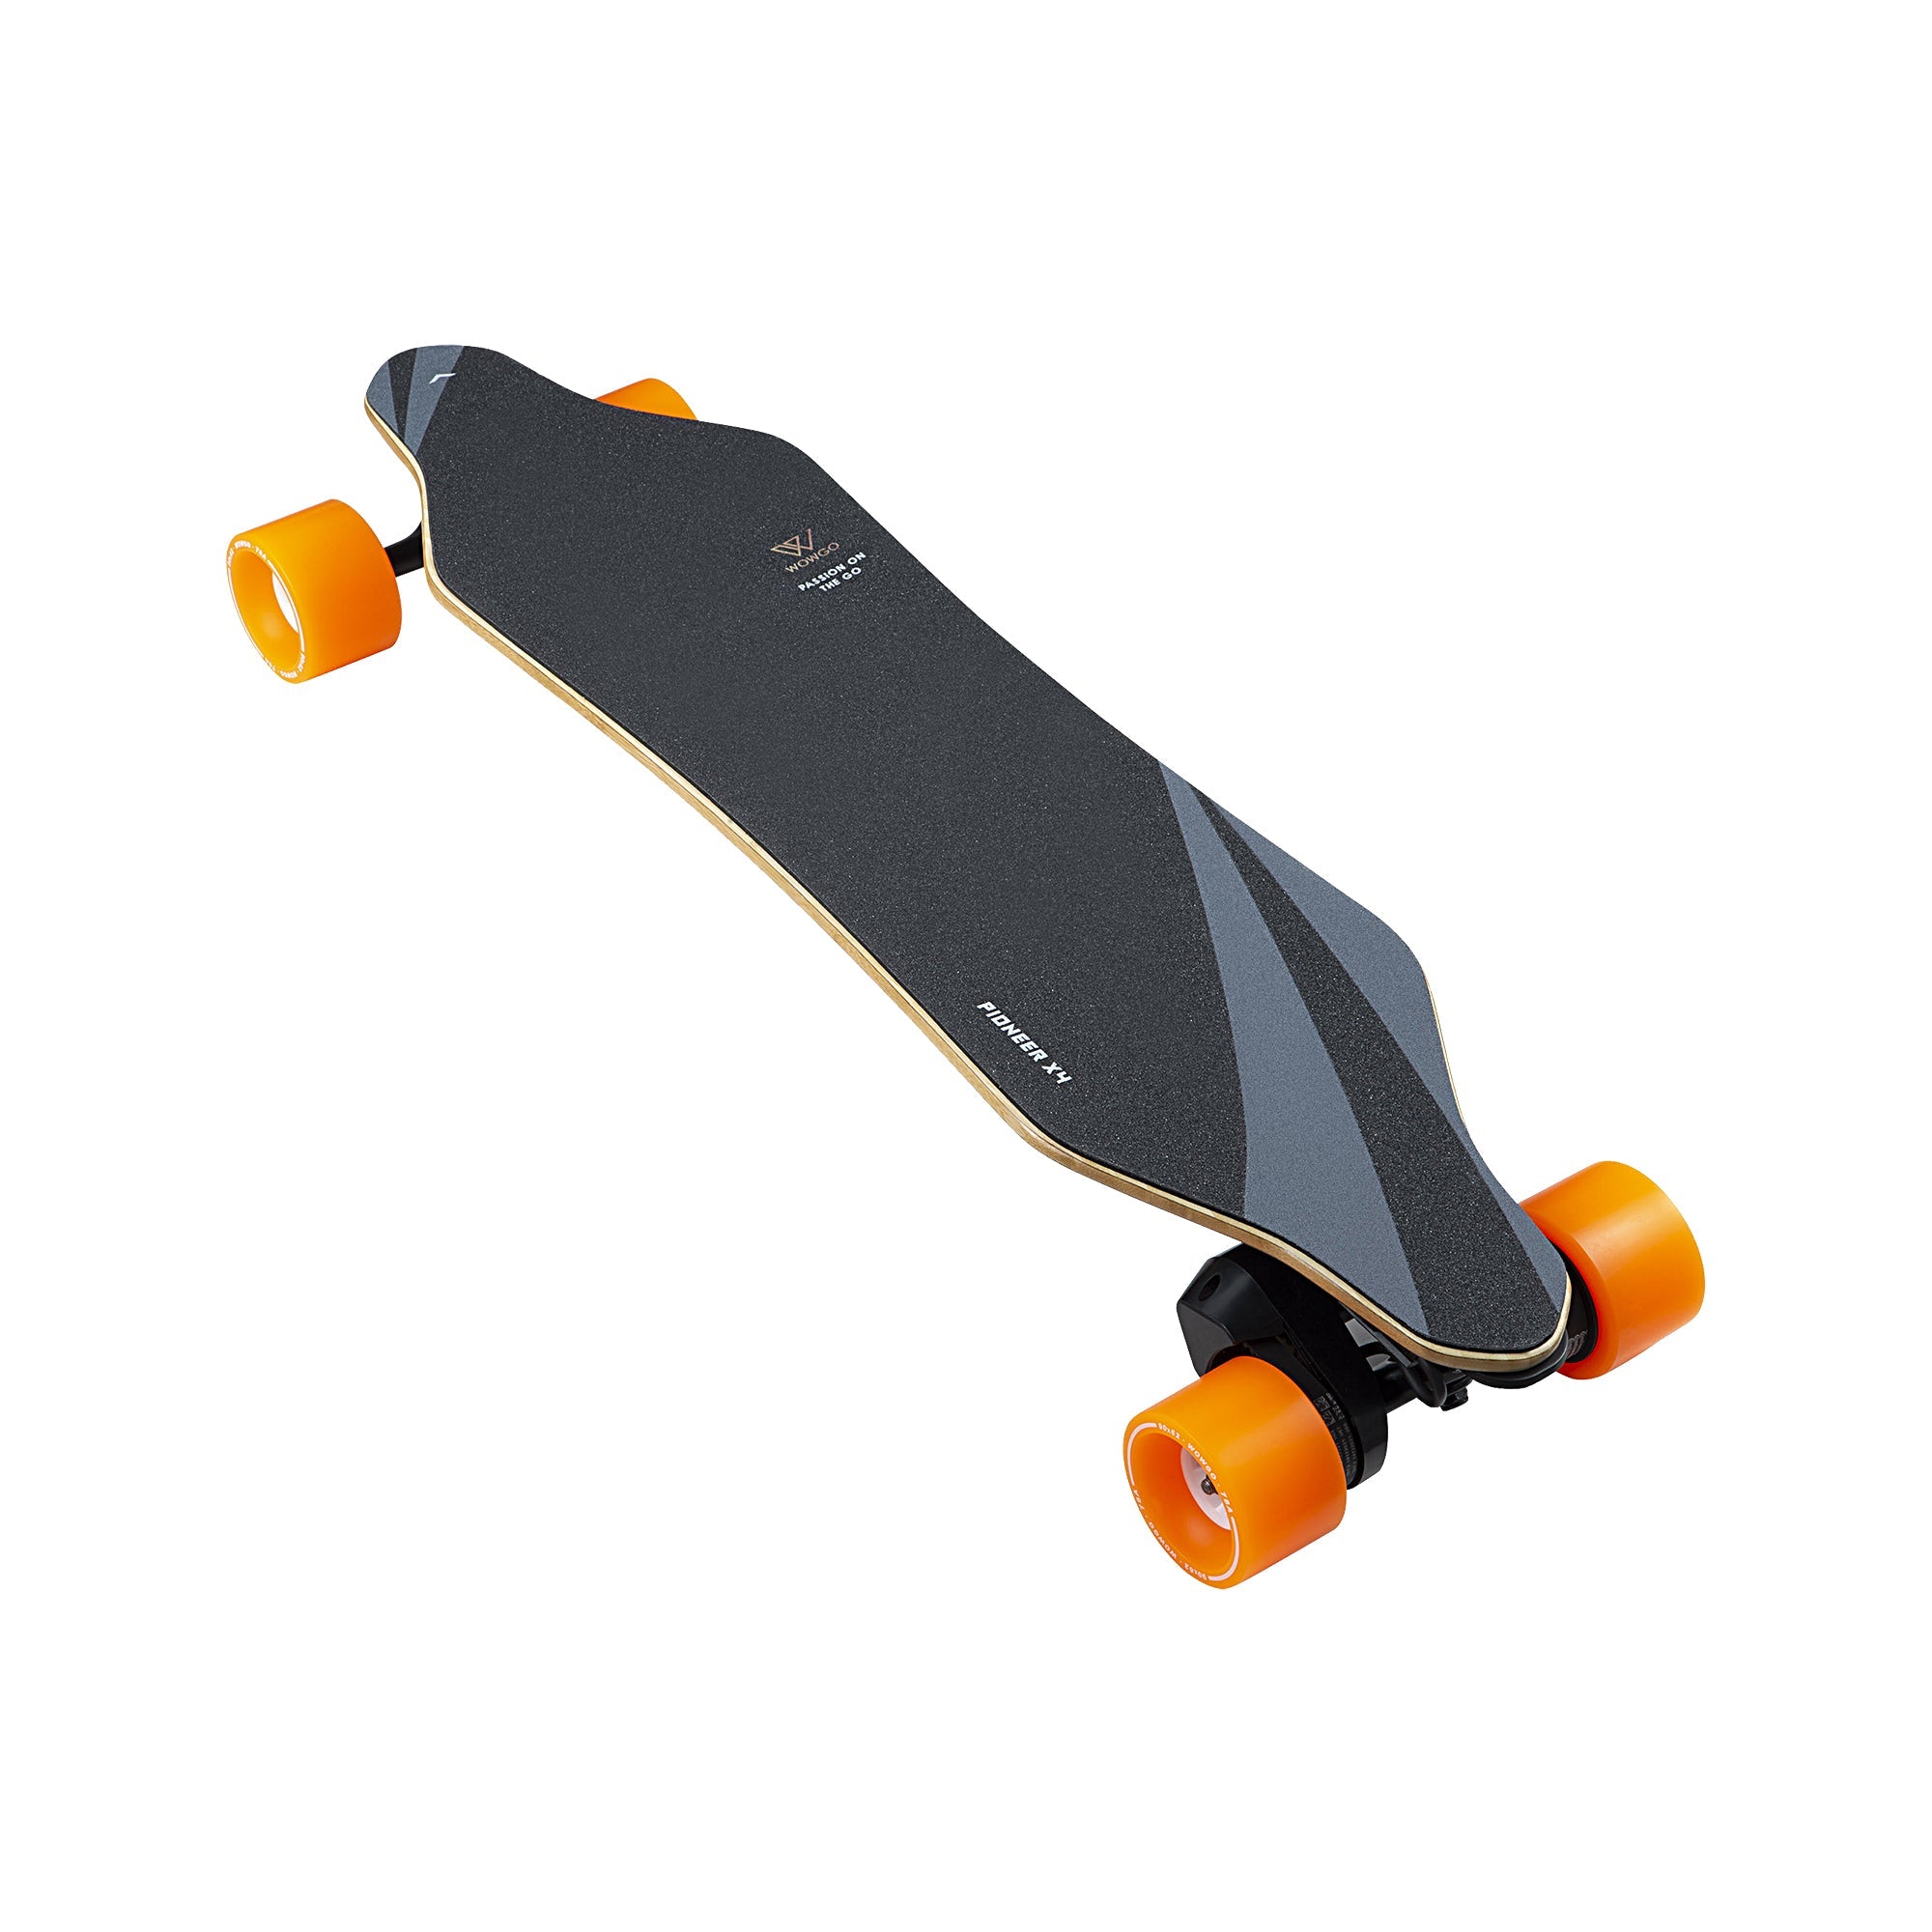 WowGo Pioneer X4 Electric Skateboard & Longboard - WOWGO BOARD Electric Skateboard ESK8 Electric Longboard